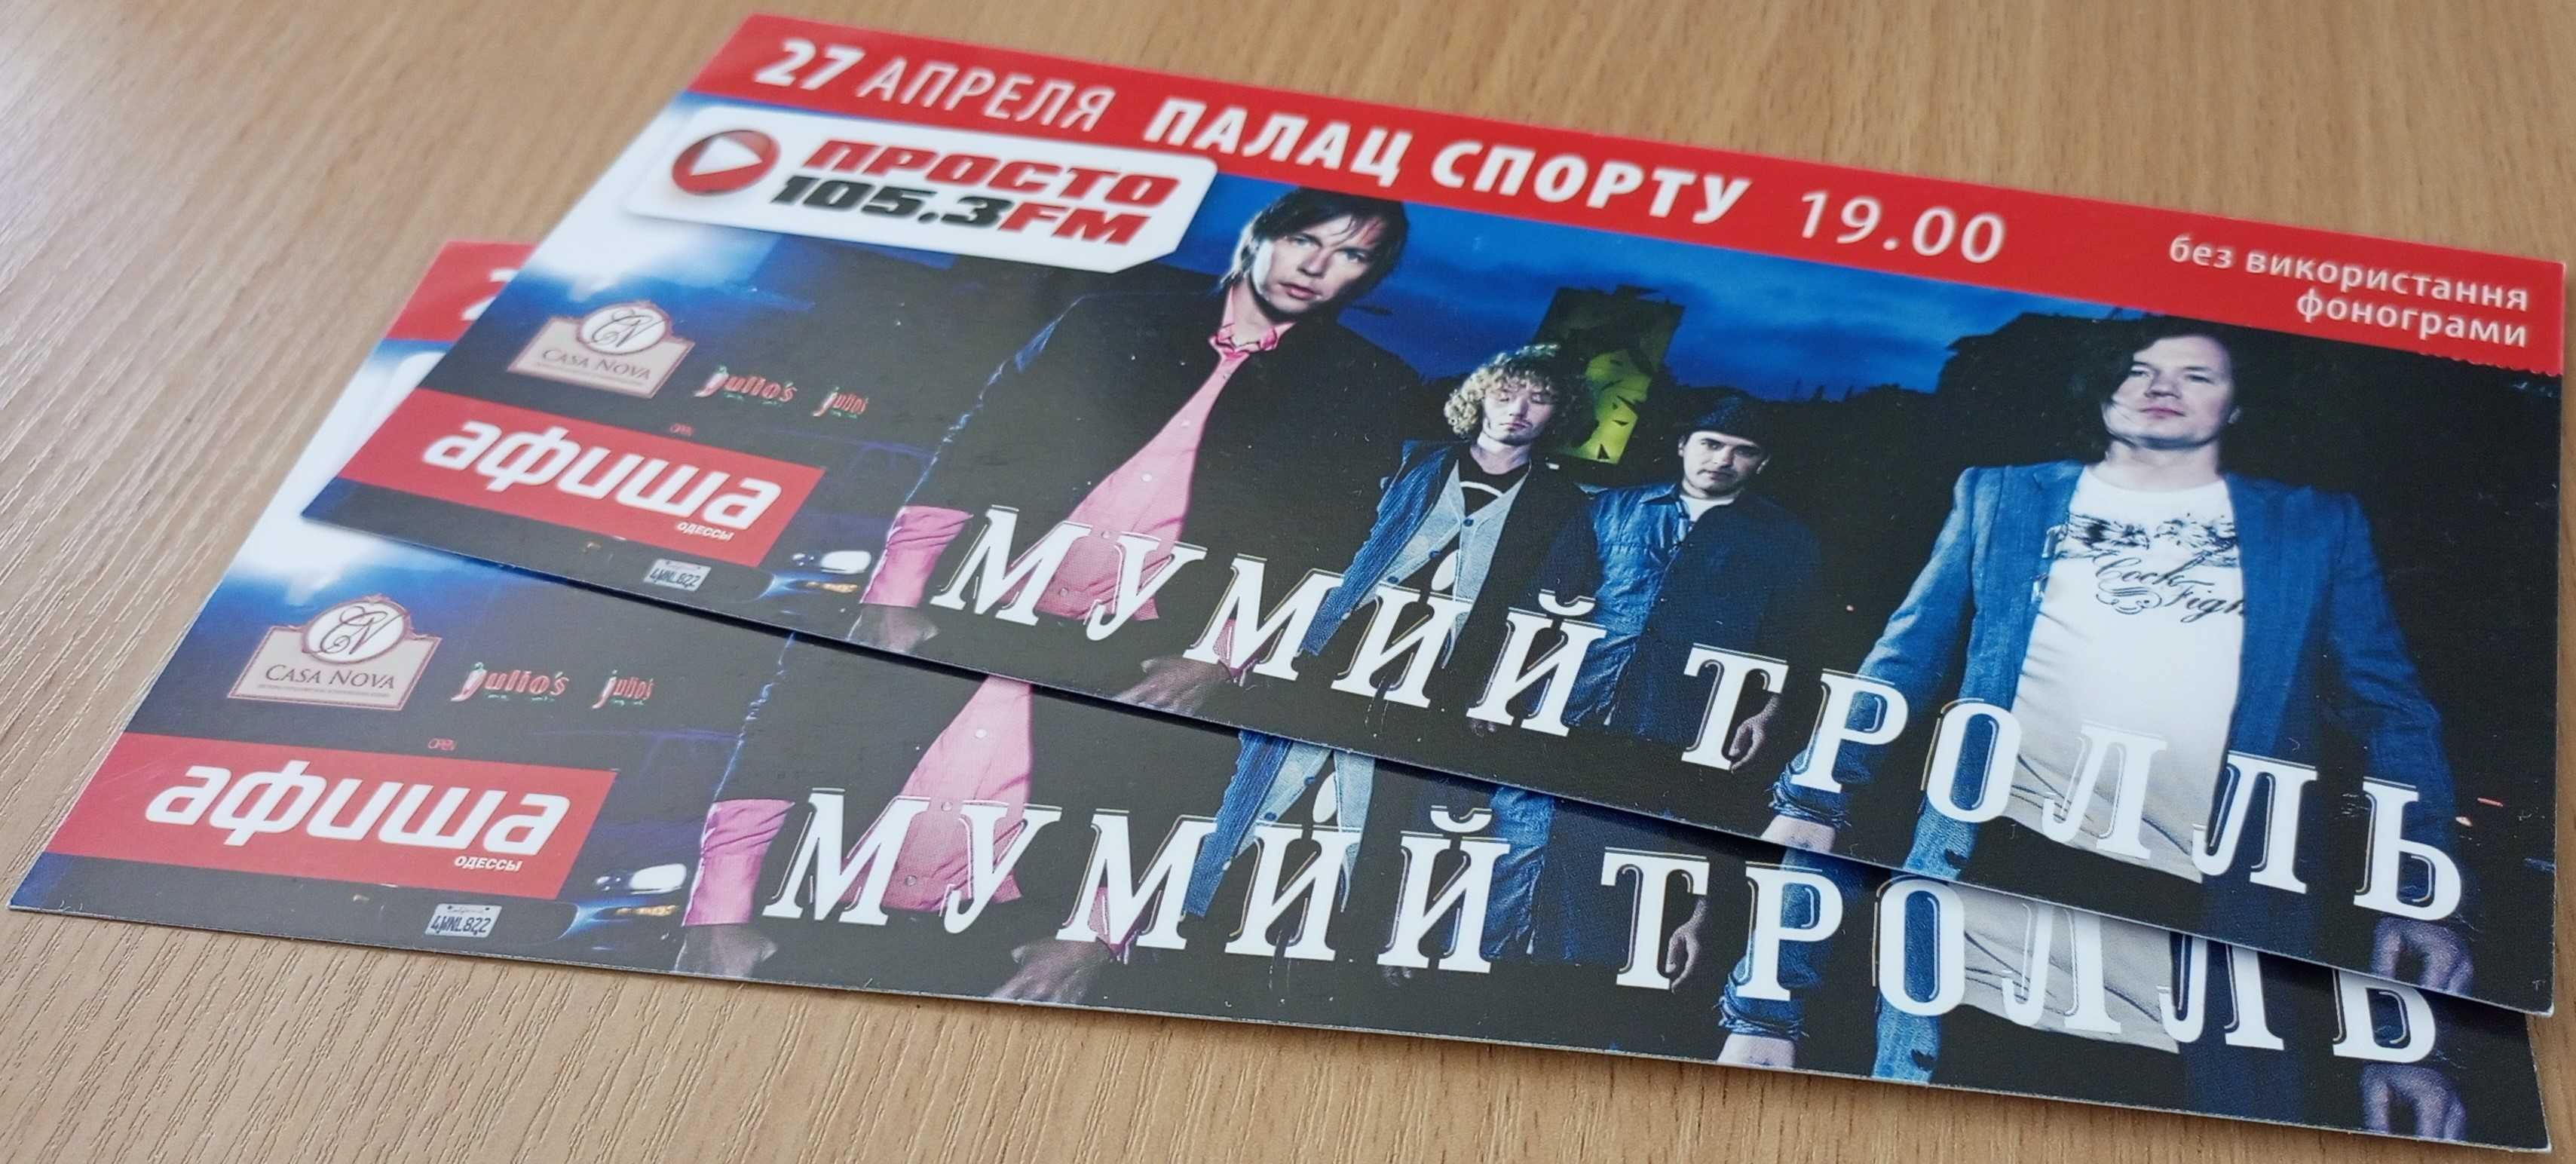 Билеты на концерт Мумий Тролль 2010 года